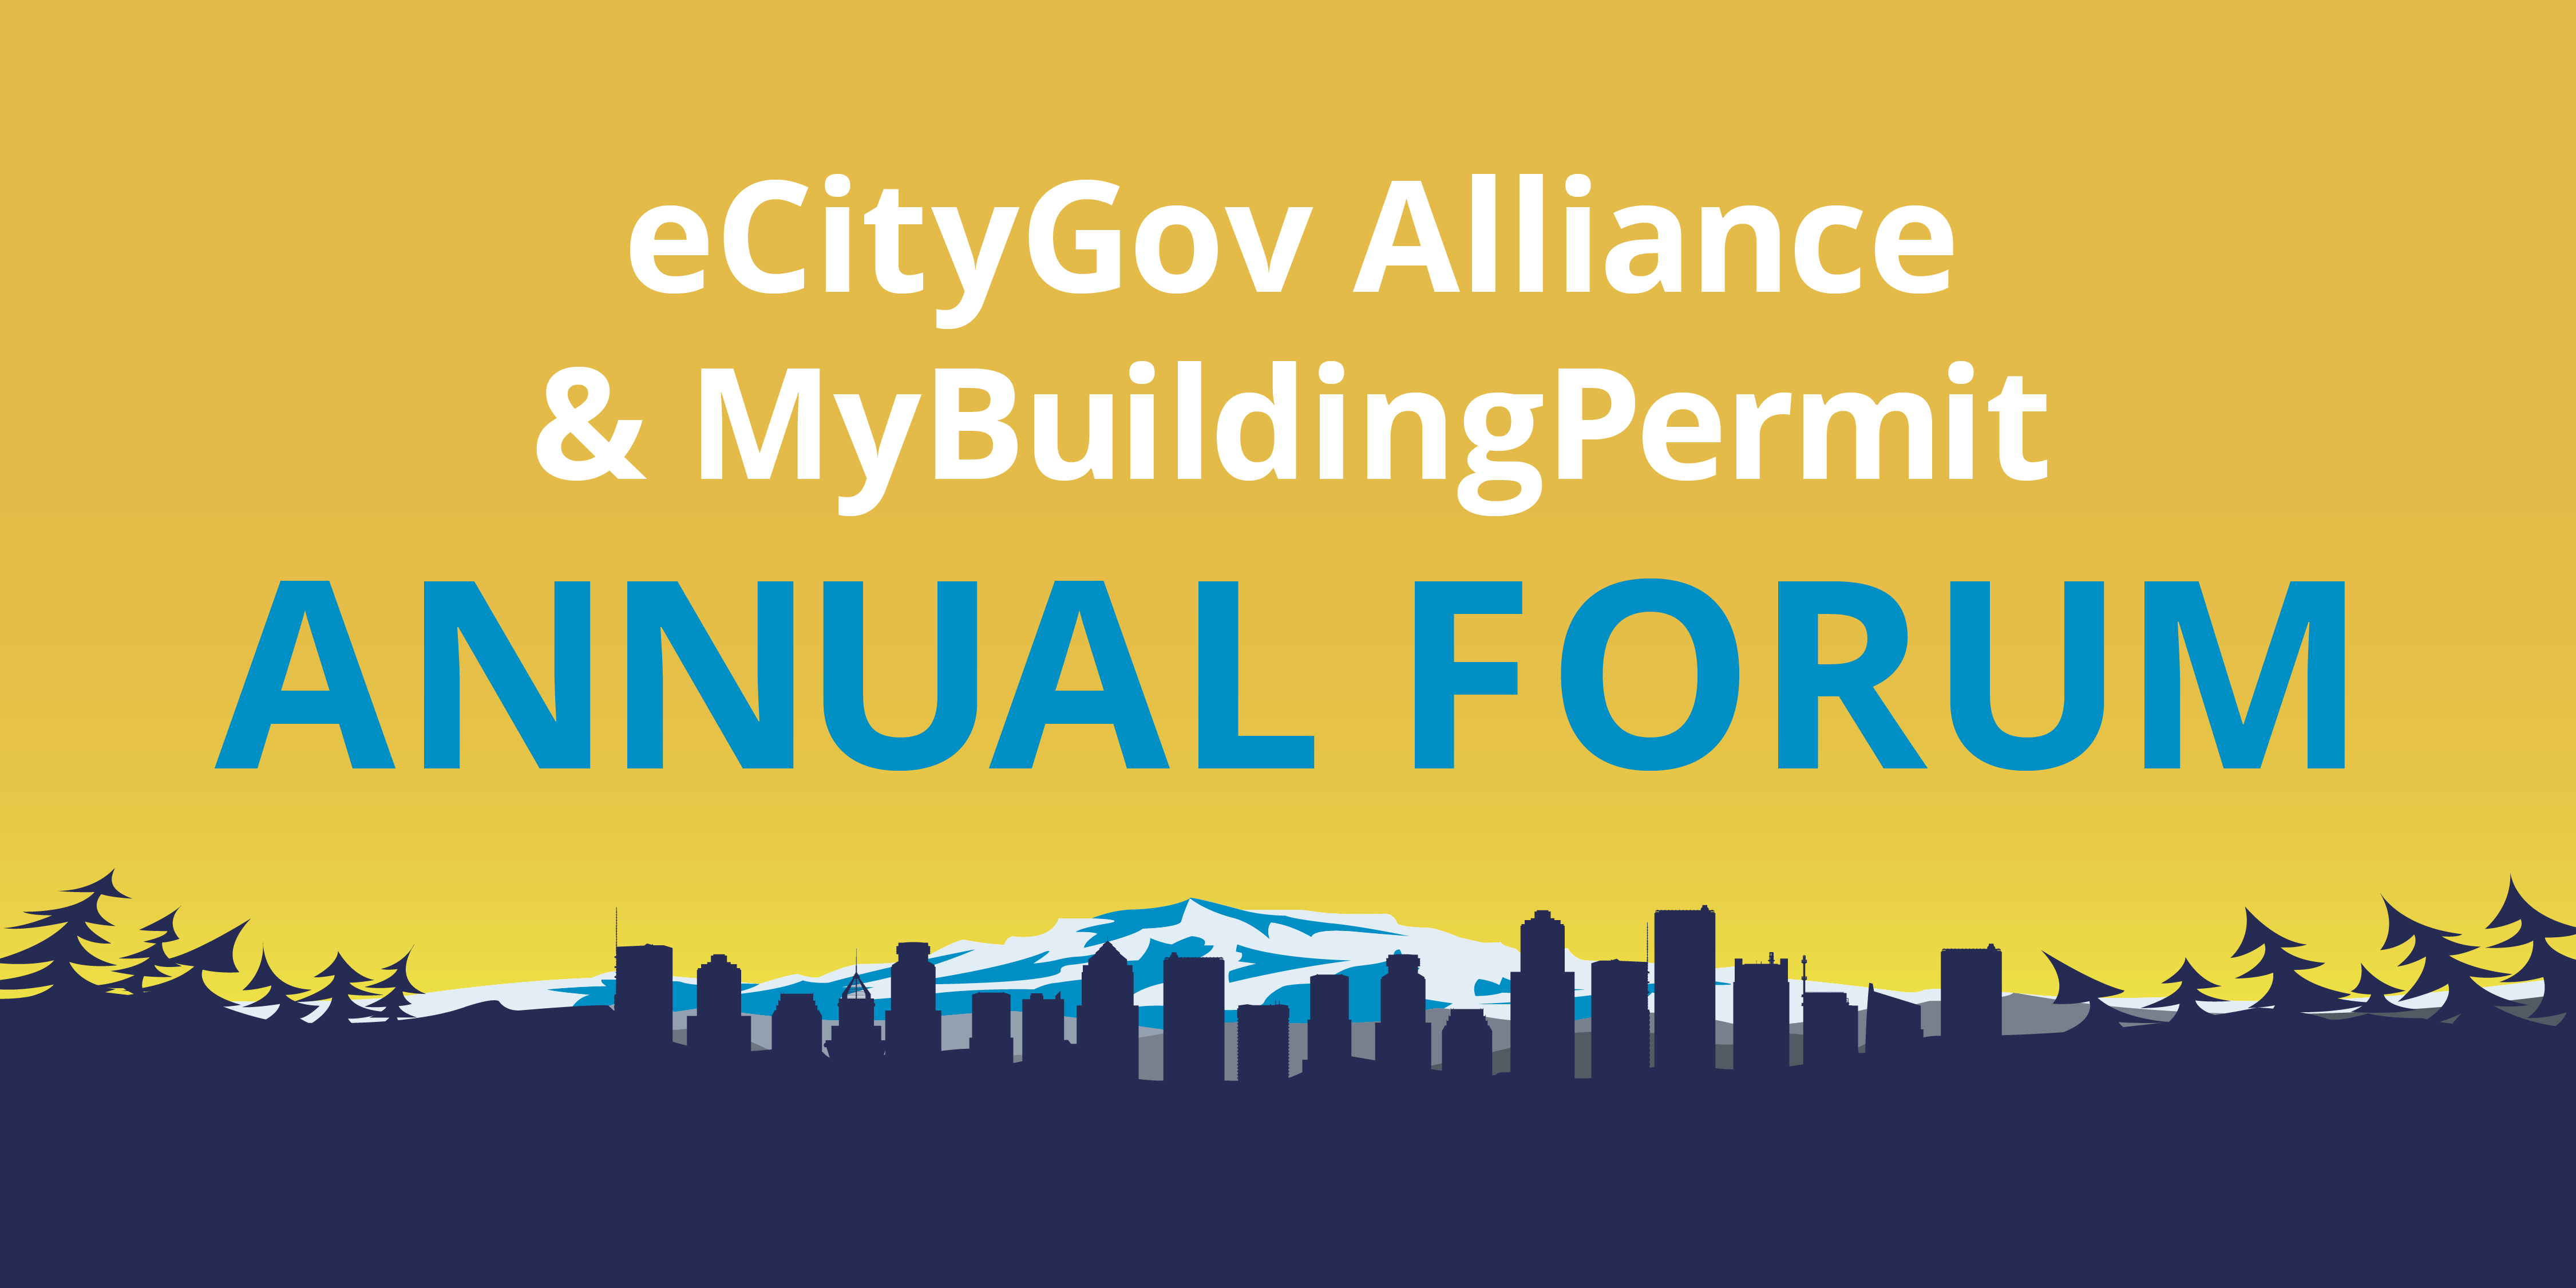 eCityGov Alliance & MyBuildingPermit Annual Forum